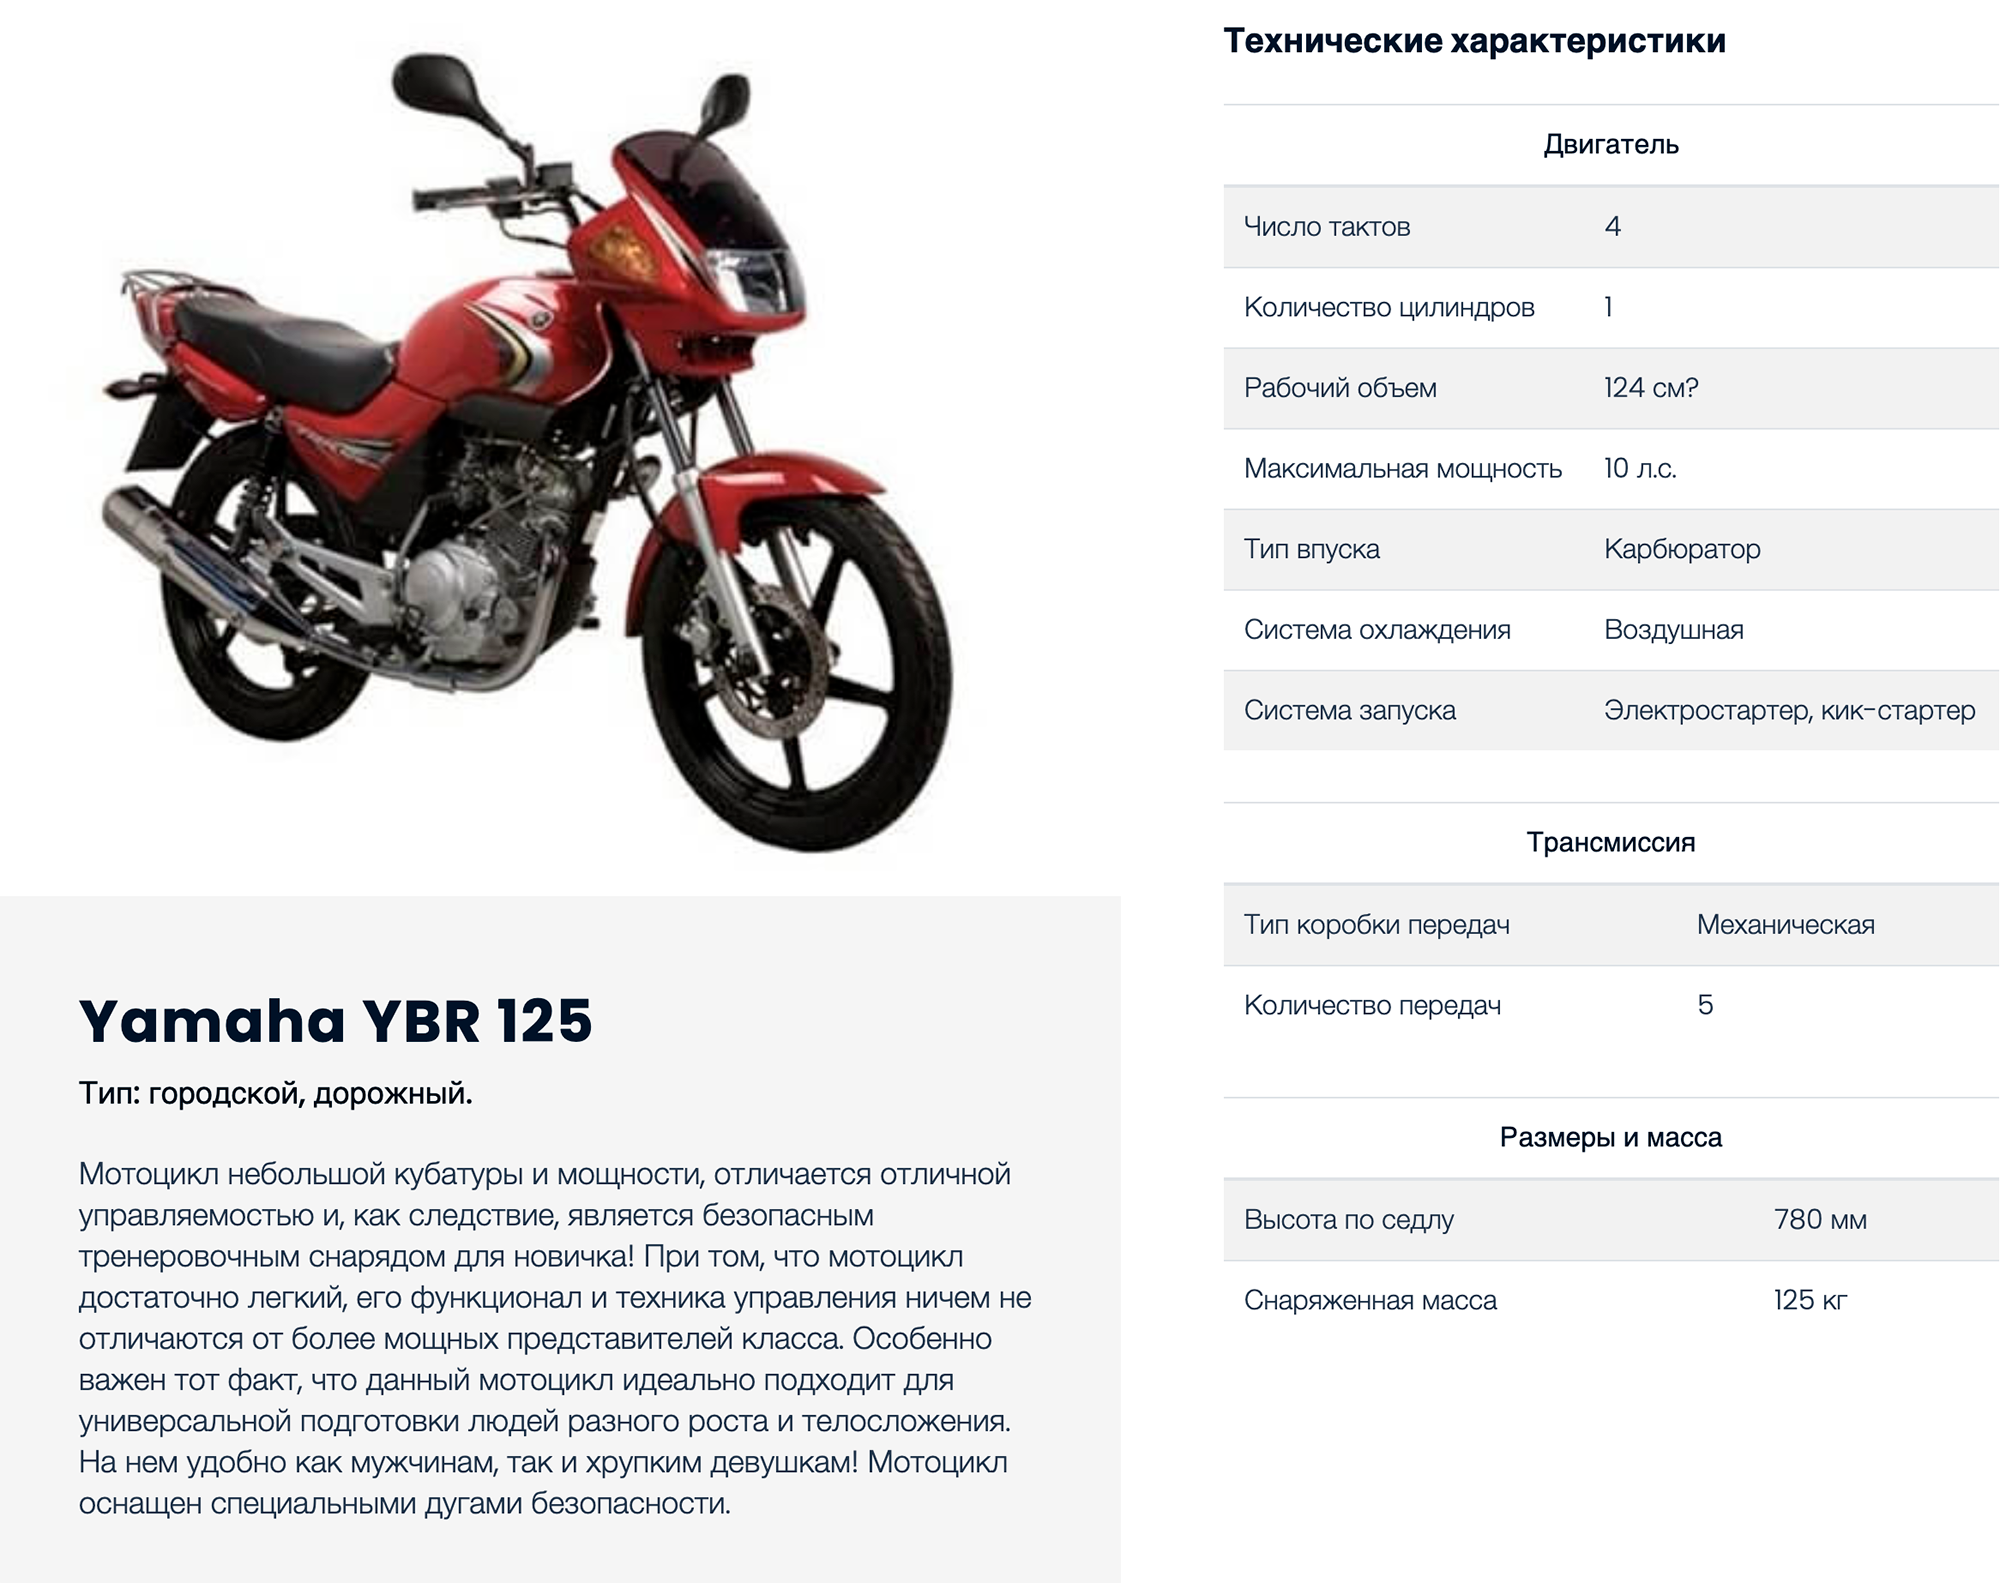 Yamaha YBR 125 ПТС. Габариты мотоцикла Ямаха юбр 125. Вес Ямаха юбр 125. Ямаха YBR 125 высота по седлу.